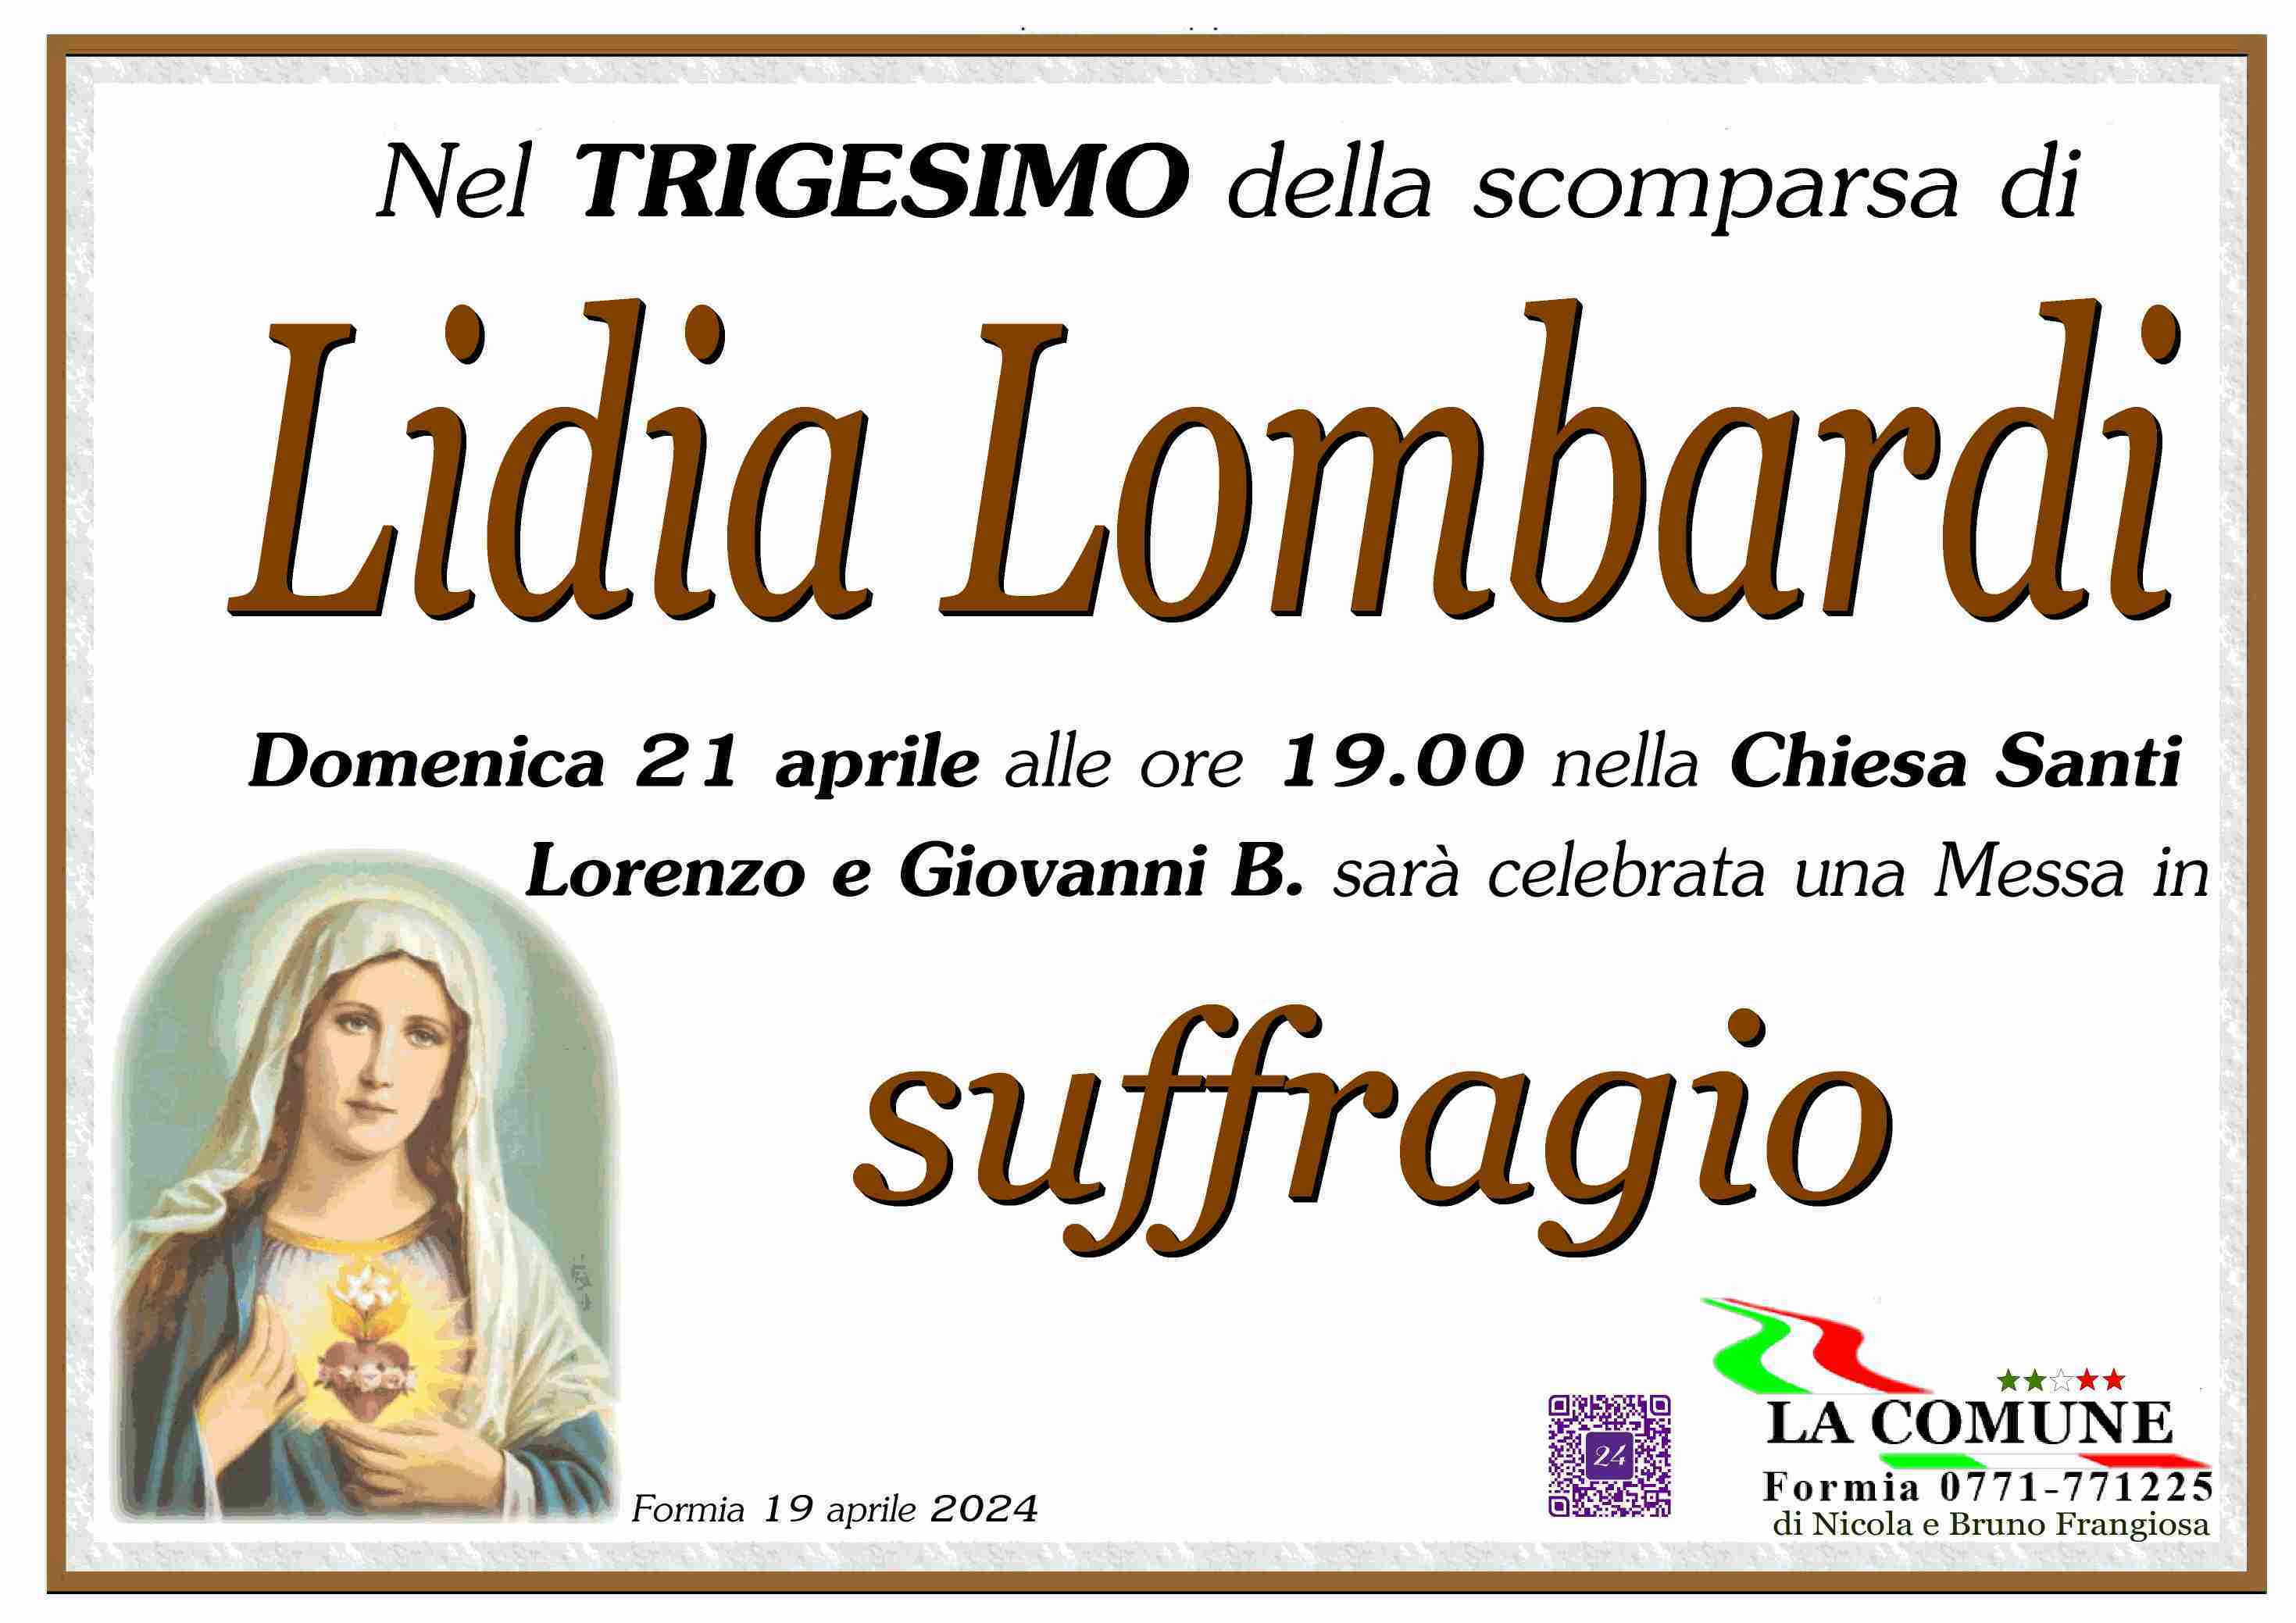 Lidia Lombardi